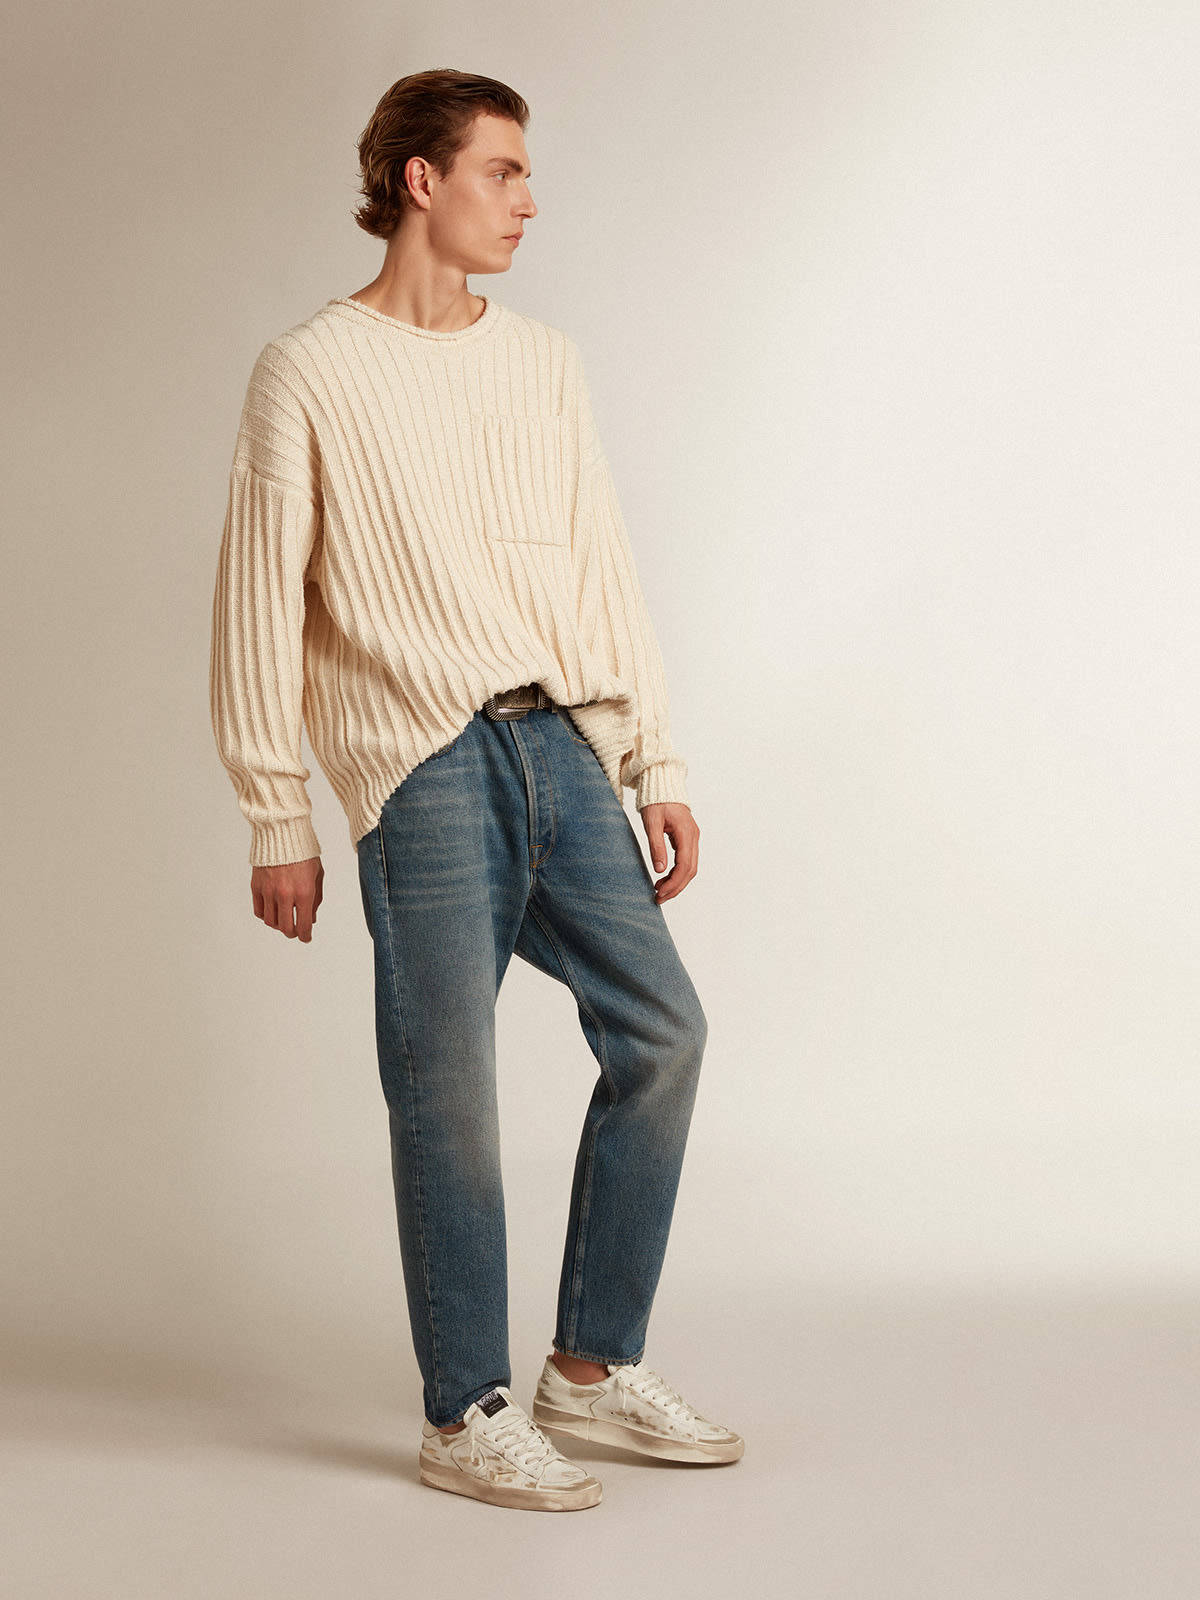 Golden Goose - Calça jeans slim masculina com lavagem média in 